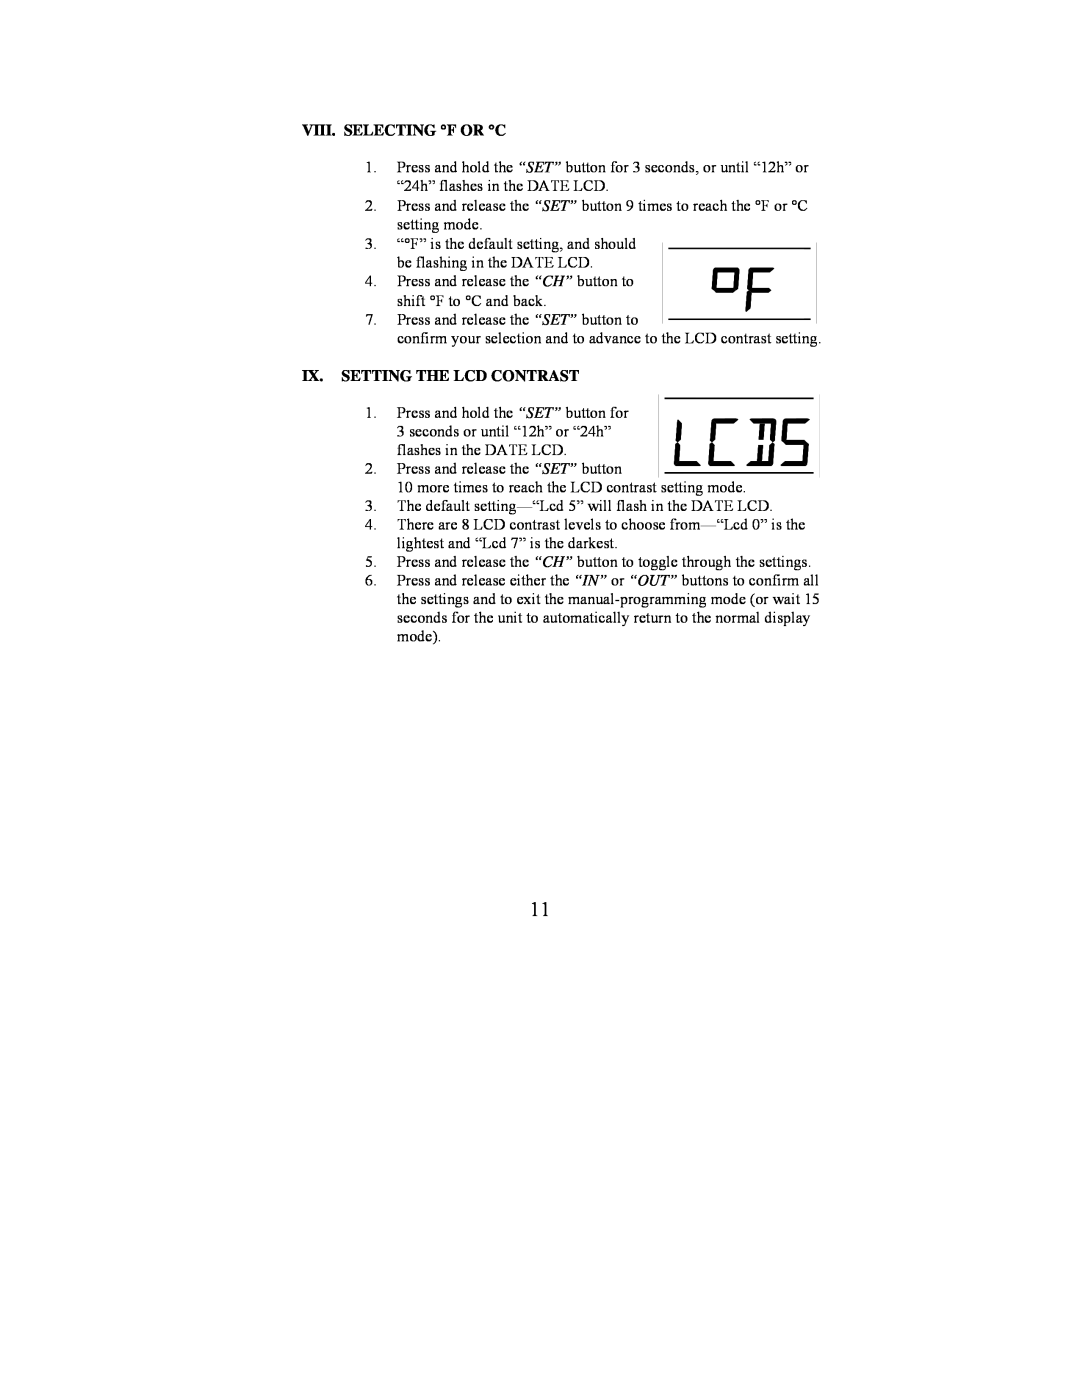 La Crosse Technology WS-9210U instruction manual Viii. Selecting F Or C, Ix. Setting The Lcd Contrast 